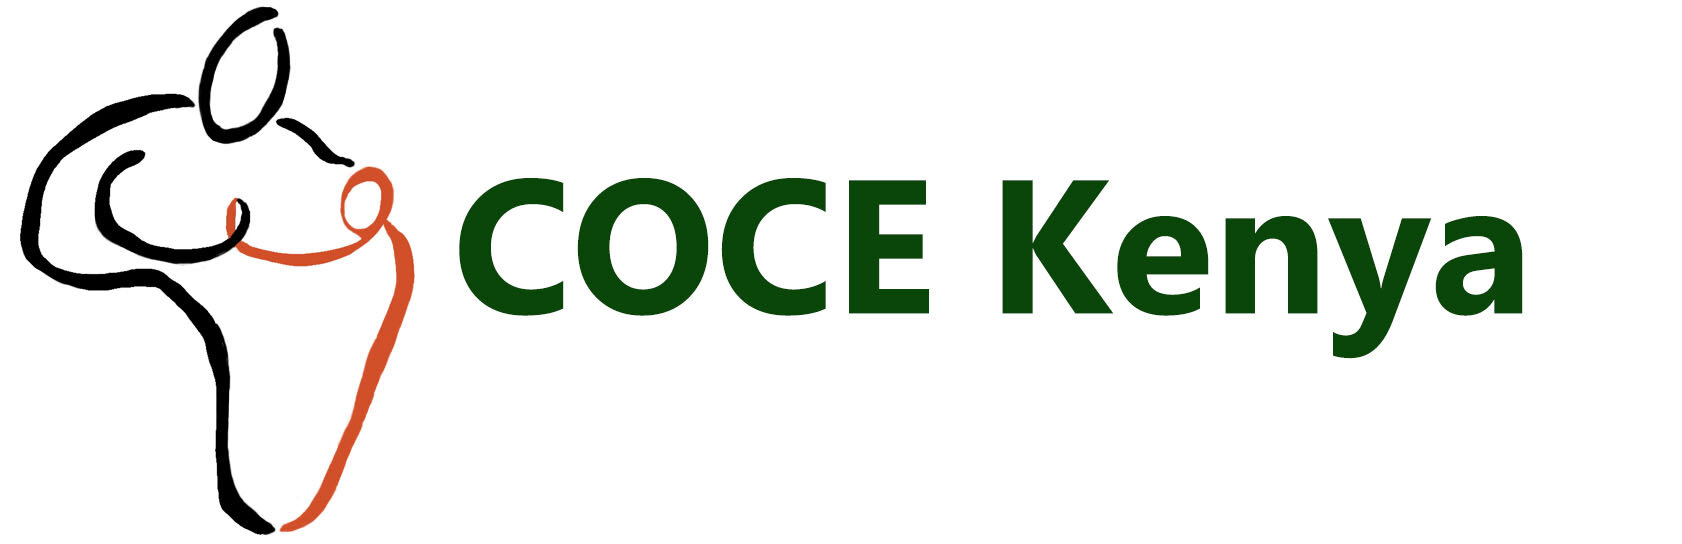 COCE Kenya